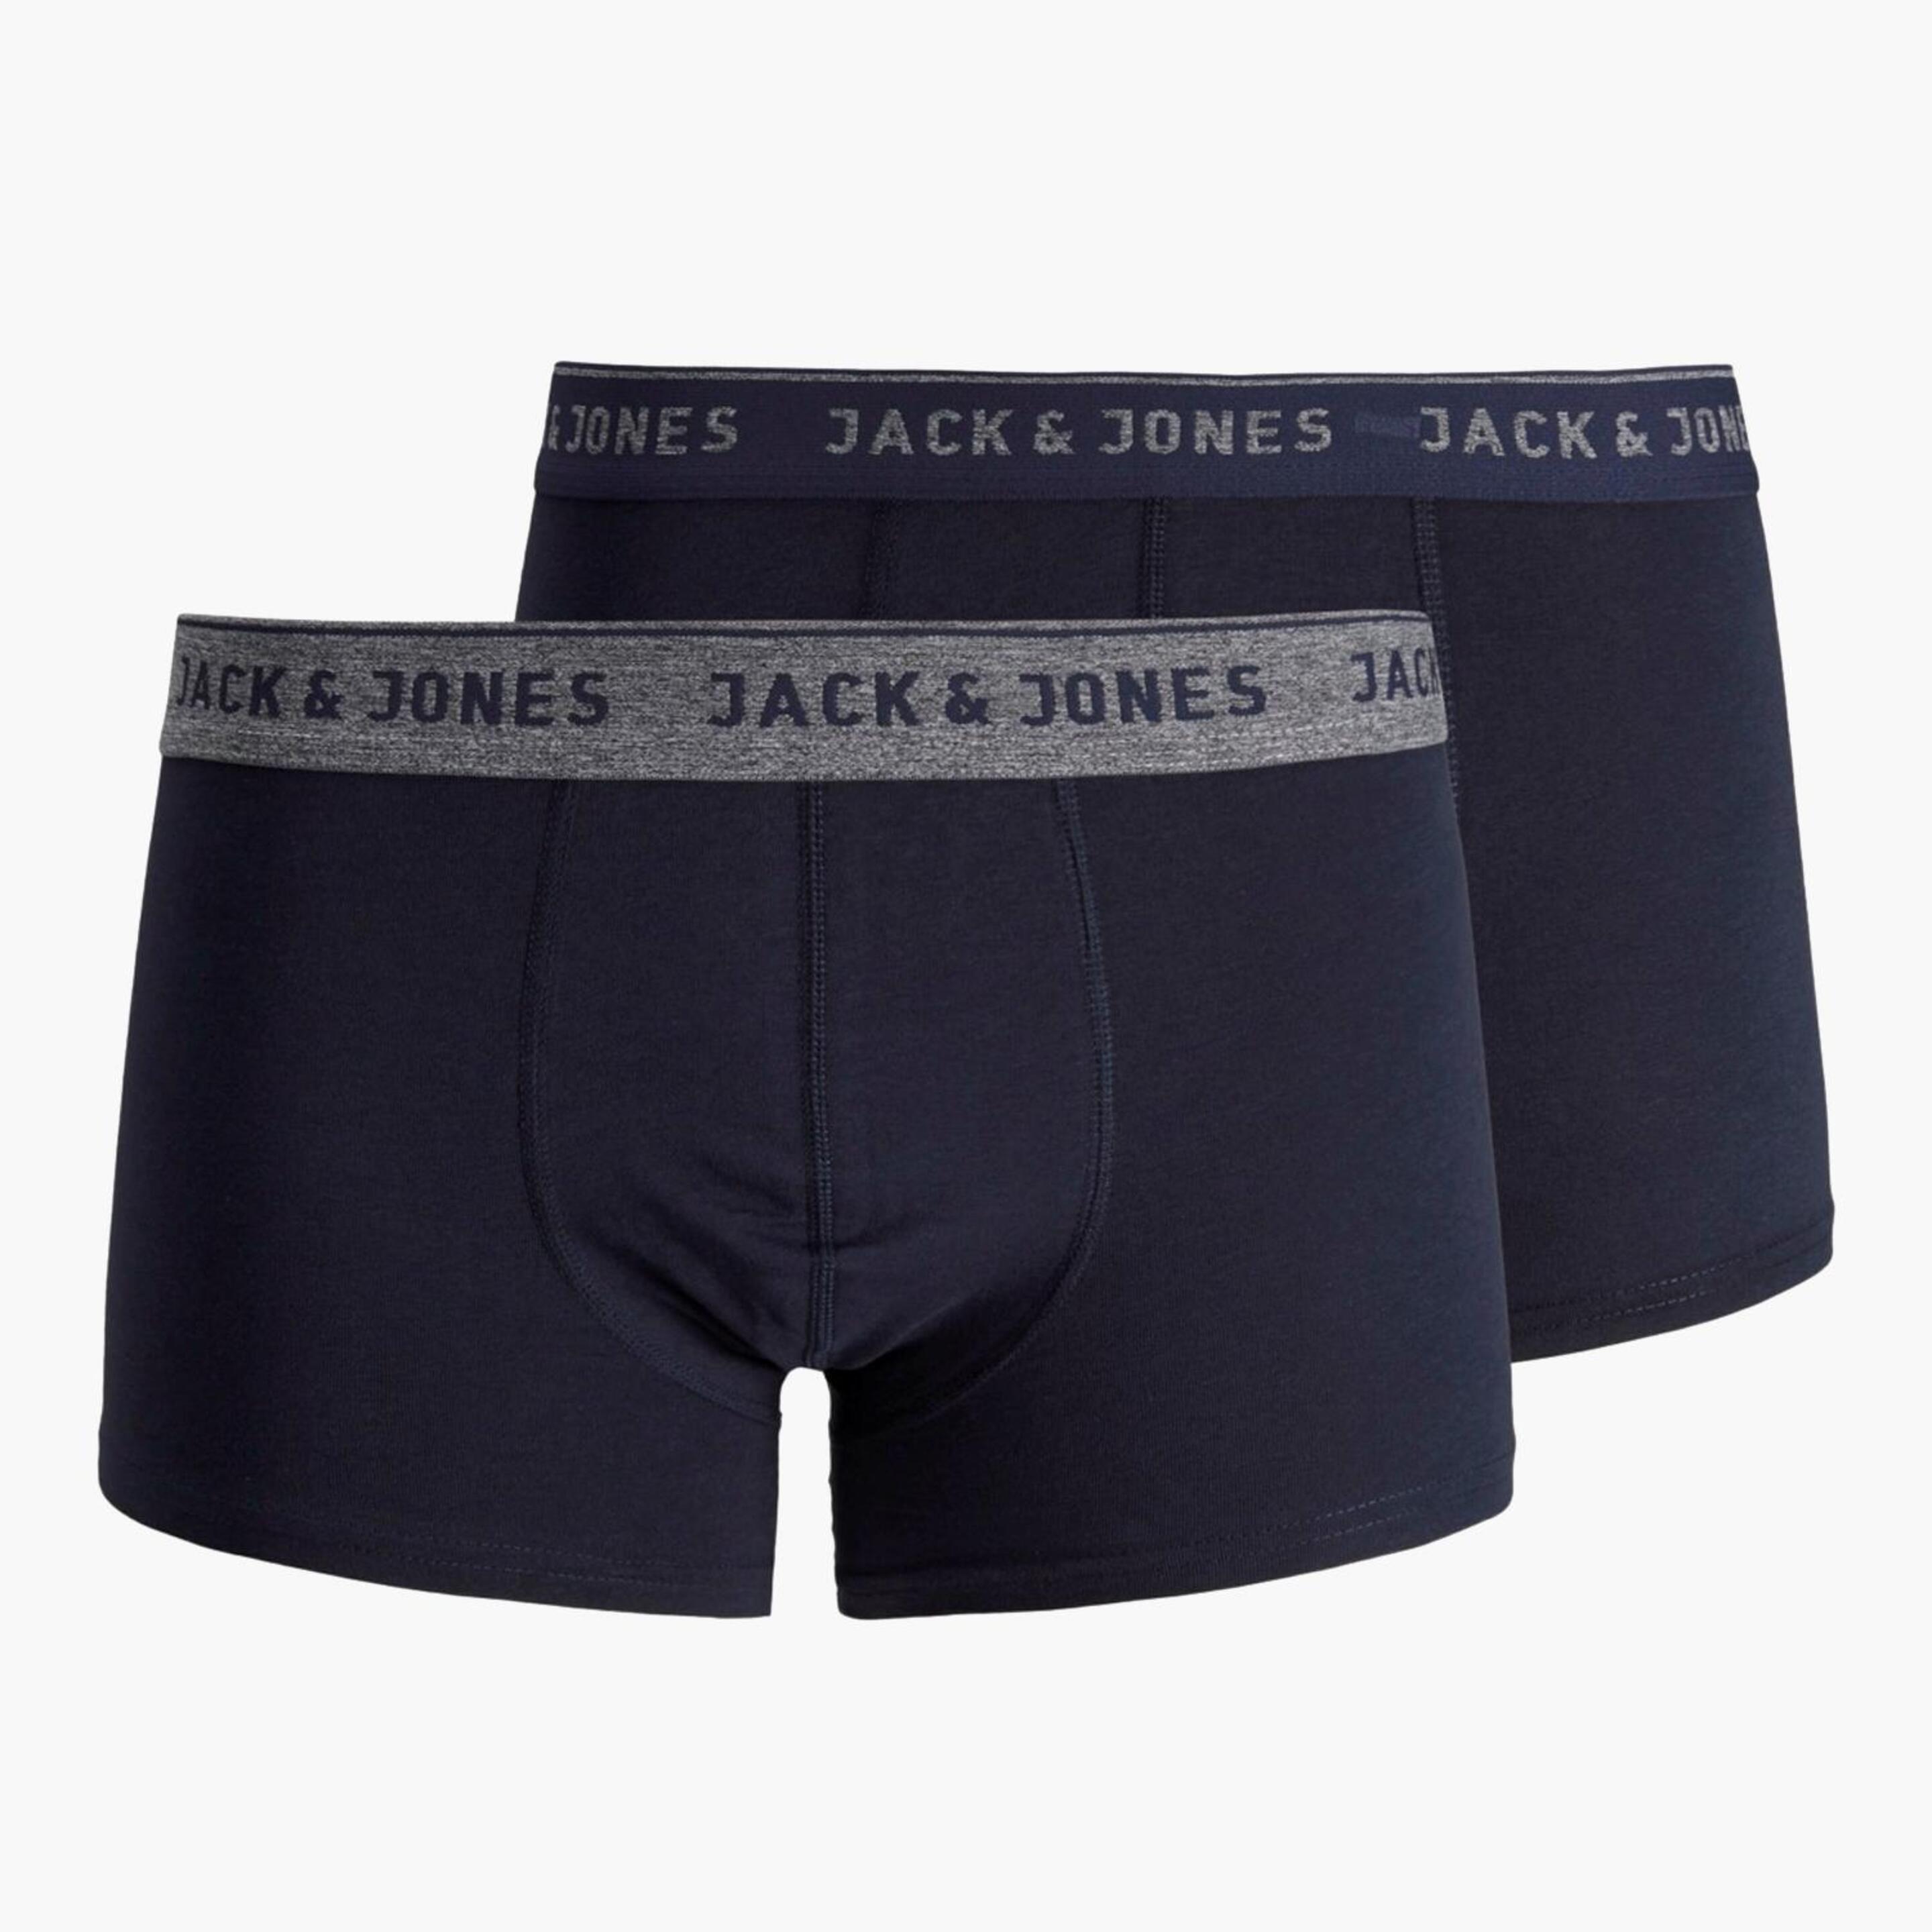 Jack&jones Trunk - azul - Calzoncillos Bóxer